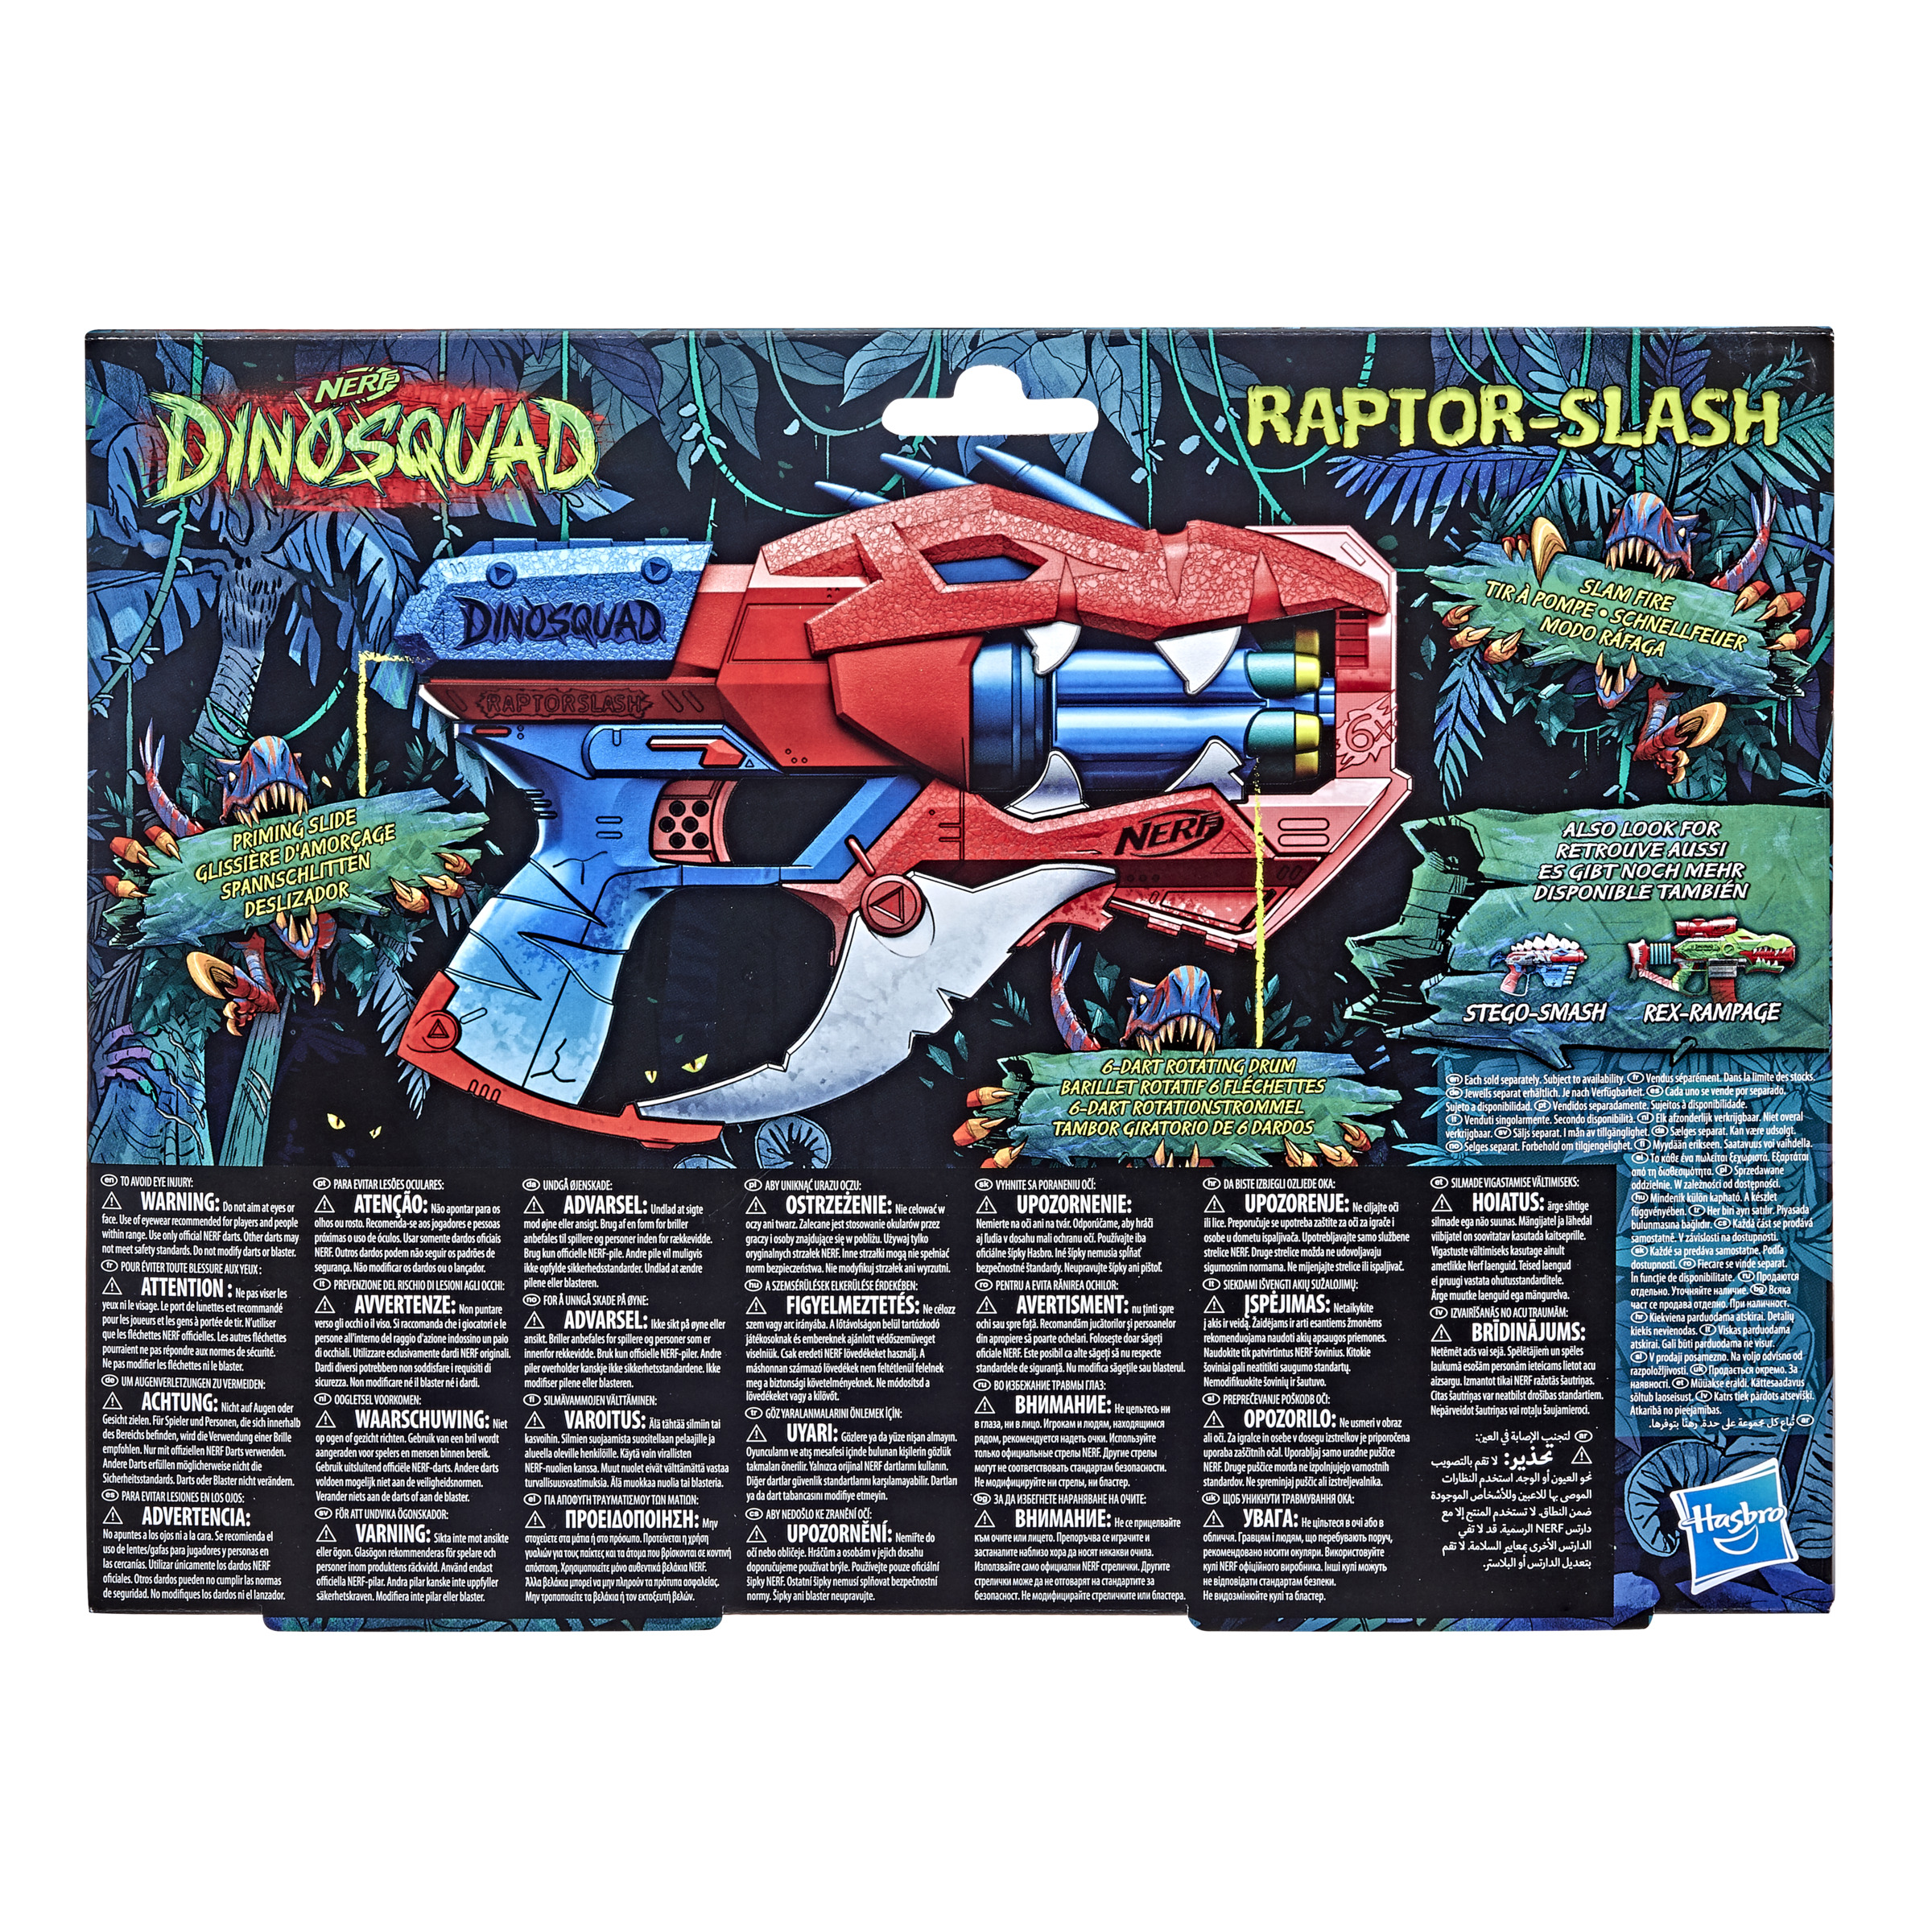 Lanzador Nerf Dinosquad Raptor-slash